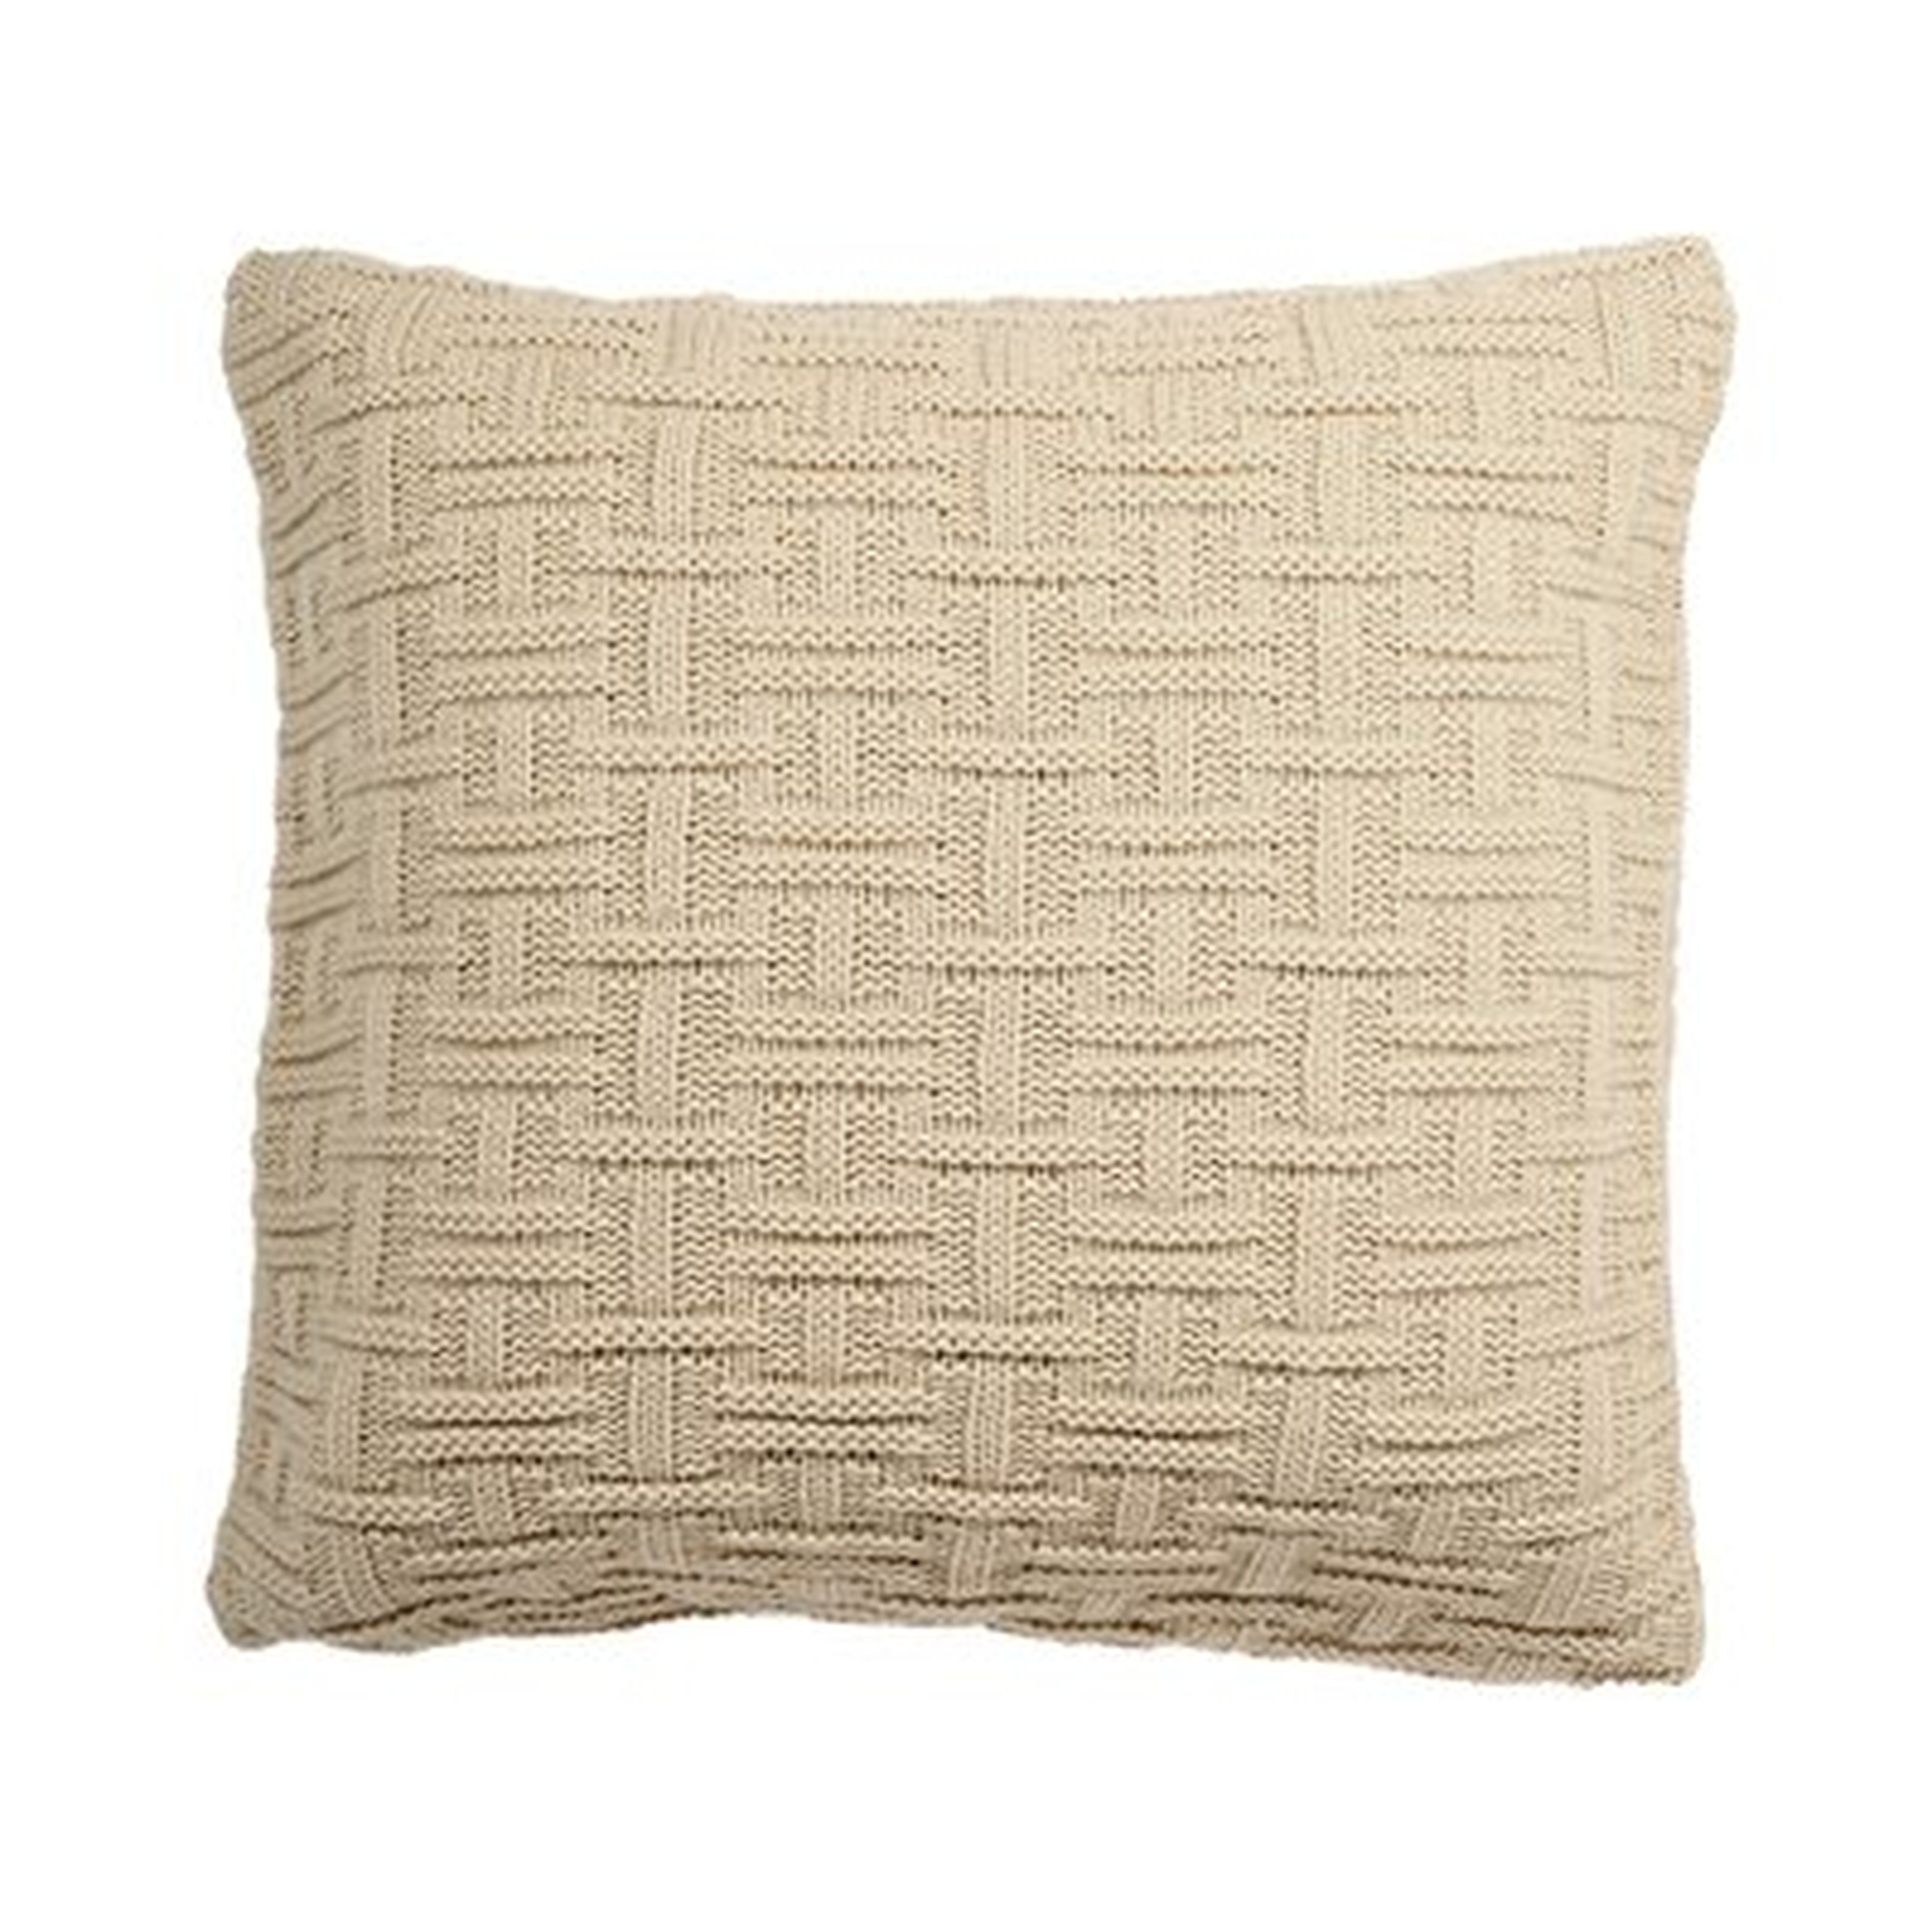 Bradsher Square Pillow Cover - Wayfair